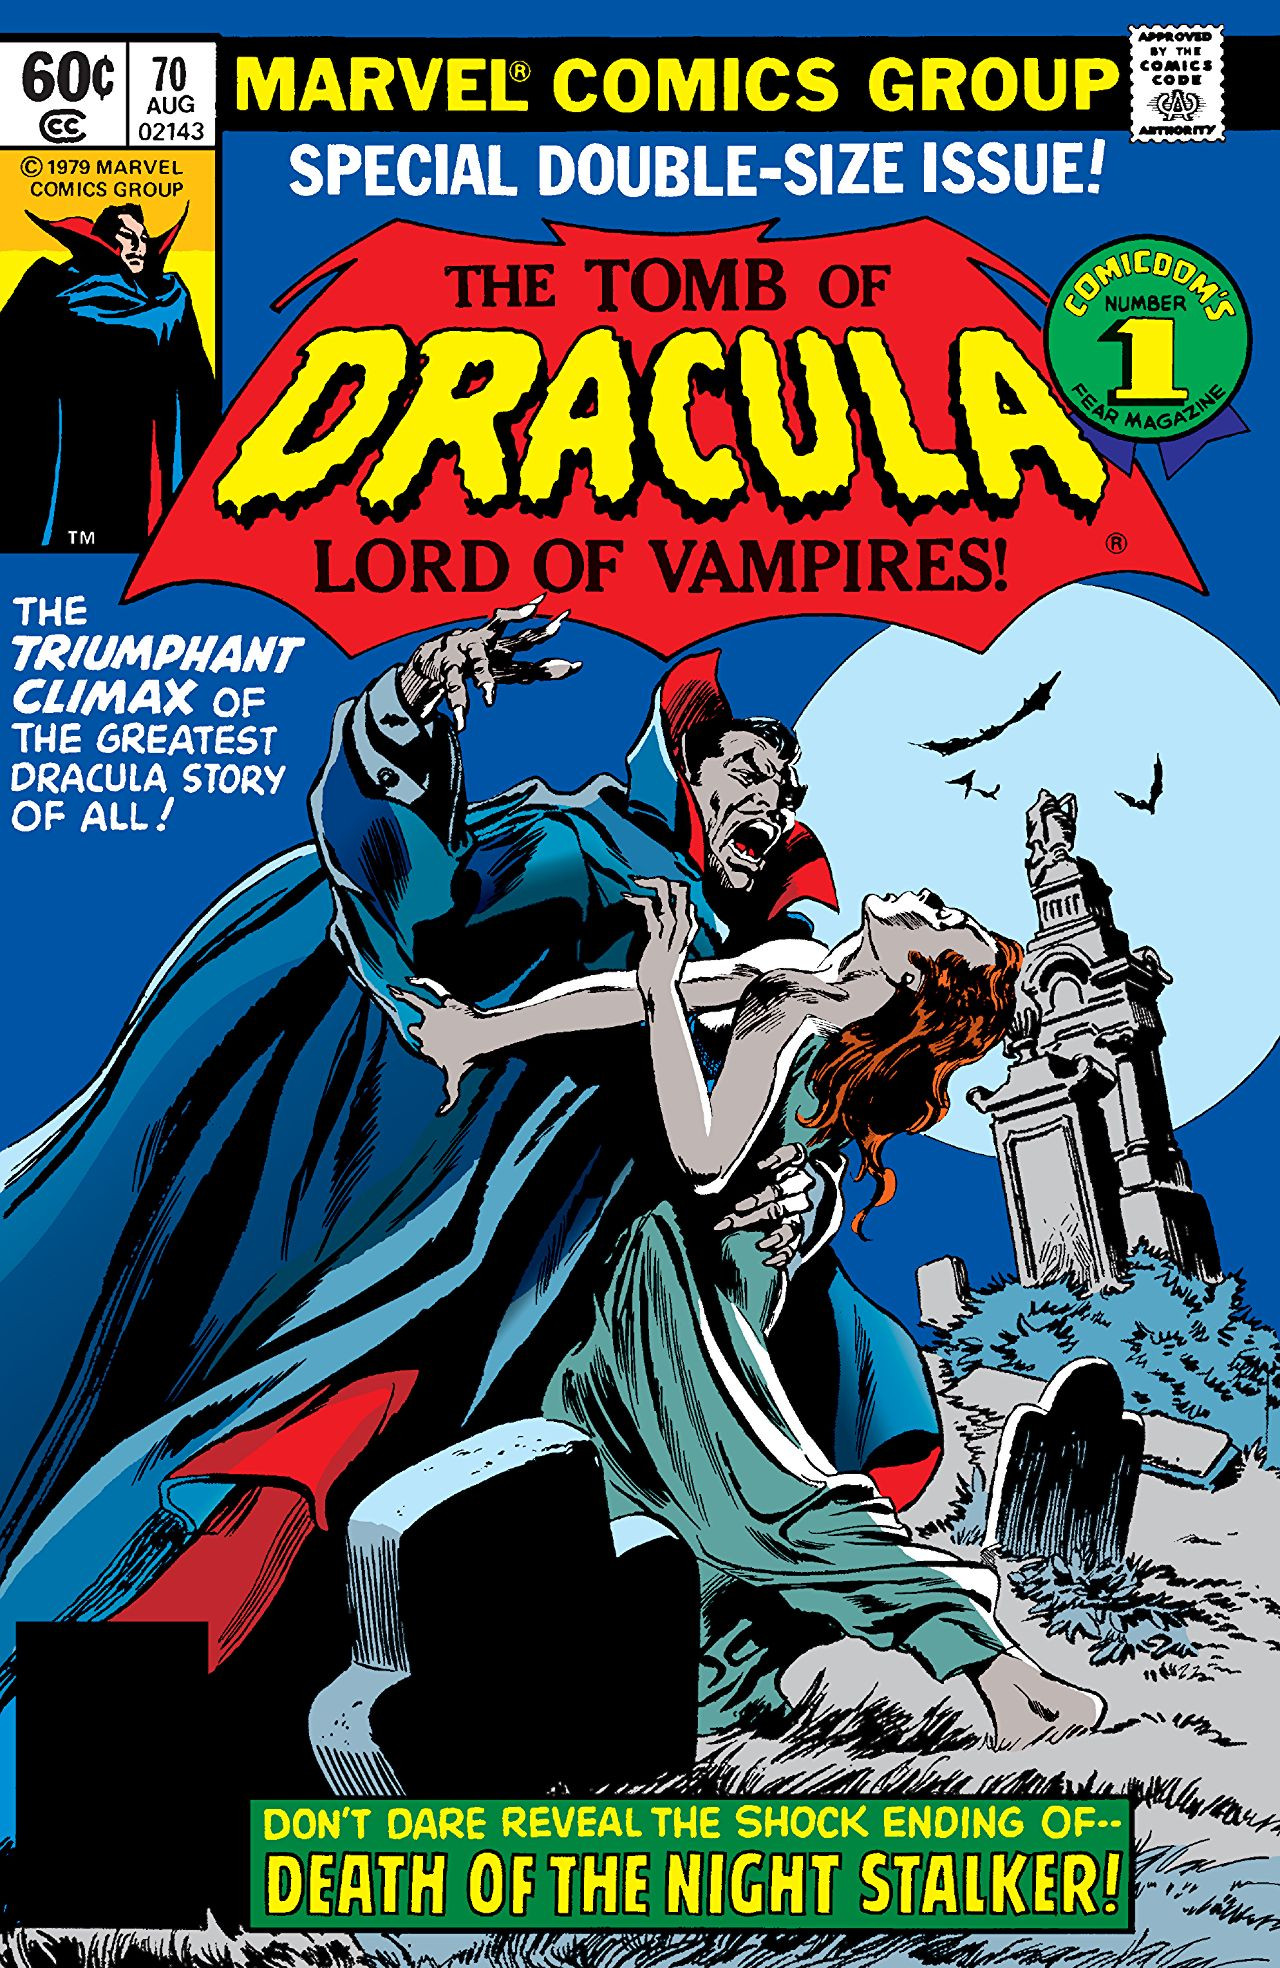 The Tomb of Dracula - Wikipedia